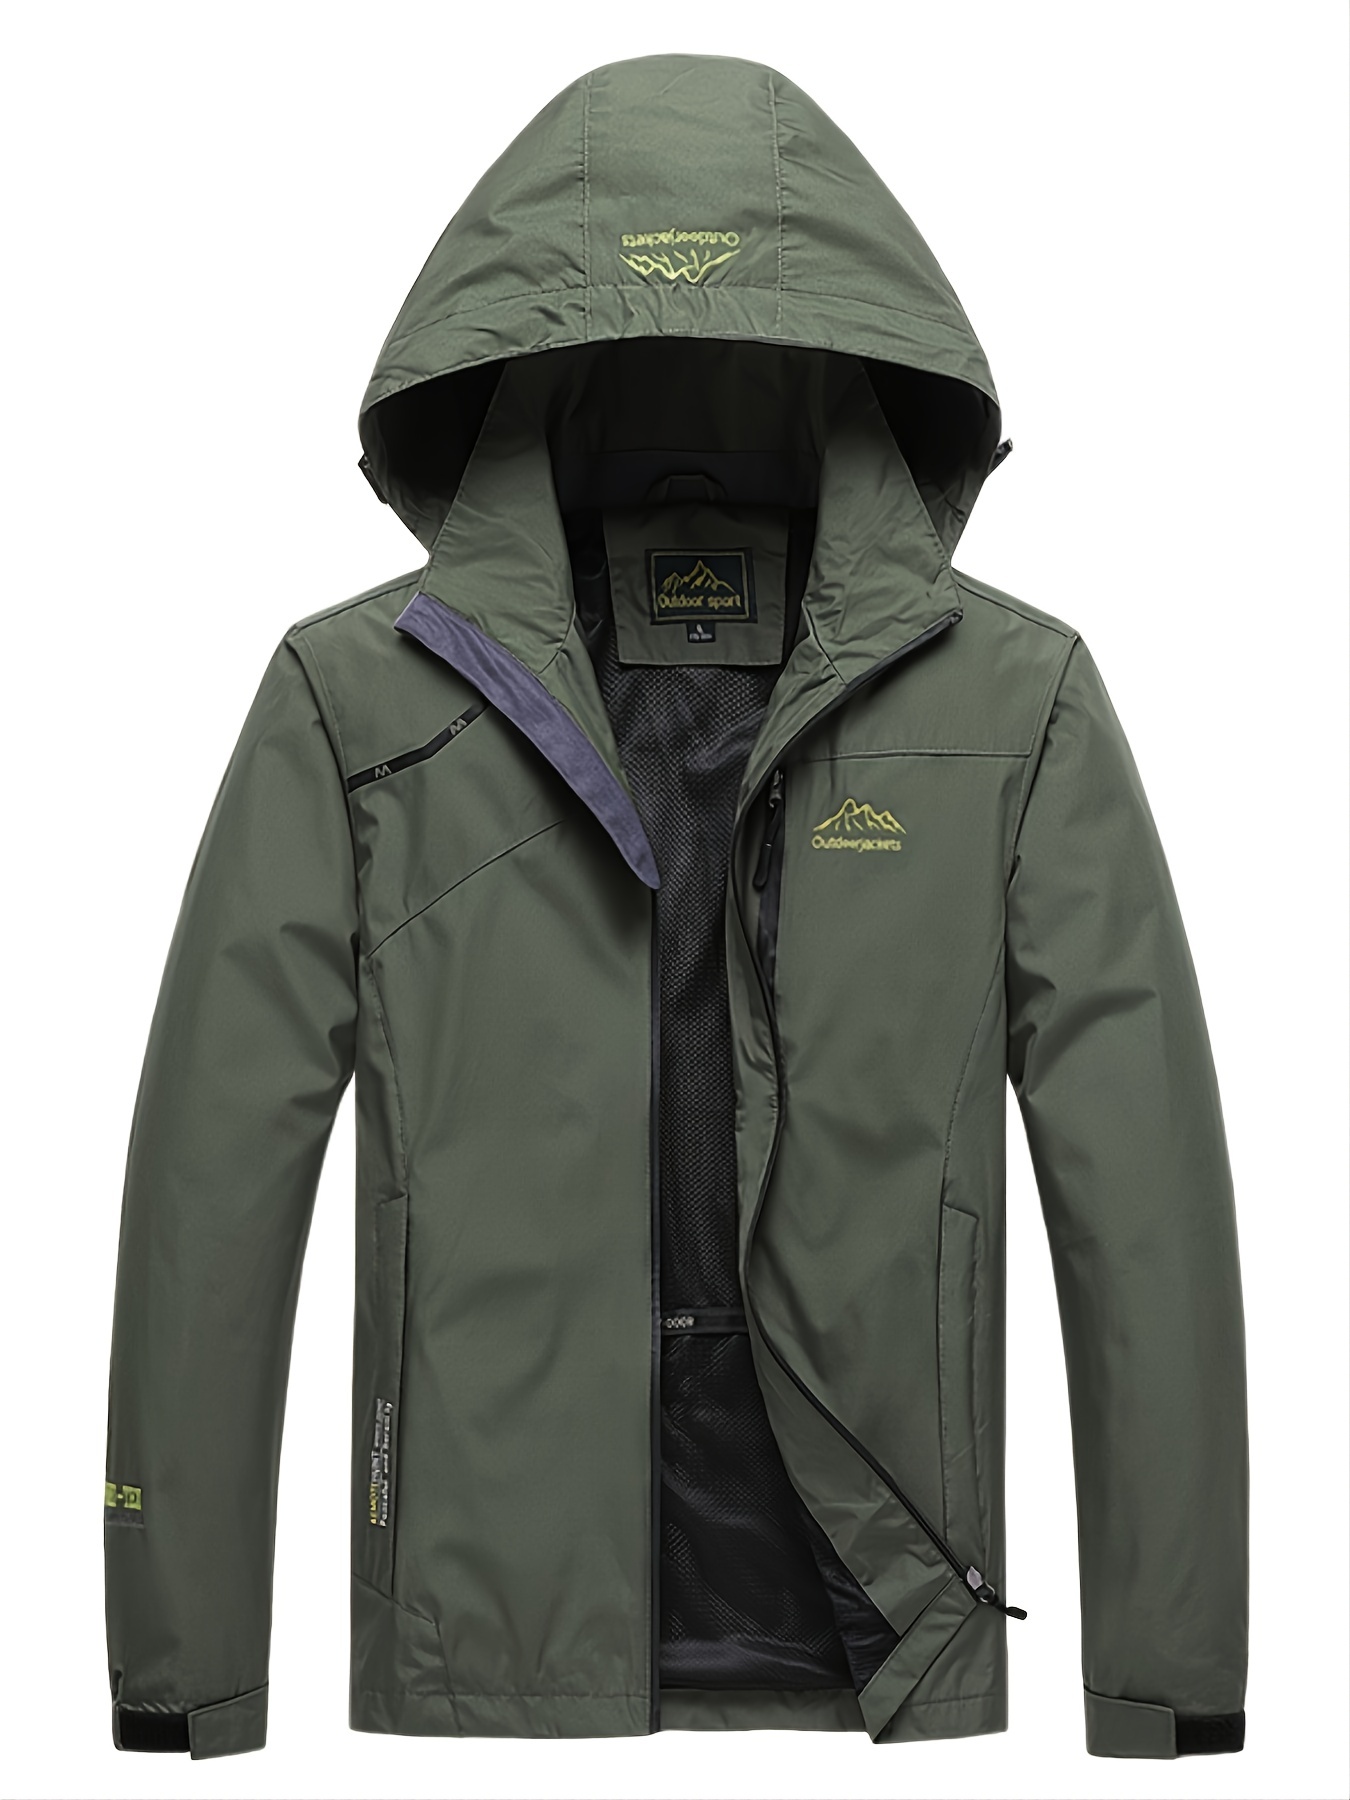 mens waterproof rain jacket lightweight raincoat windbreaker with hood for hiking travel outdoor details 21